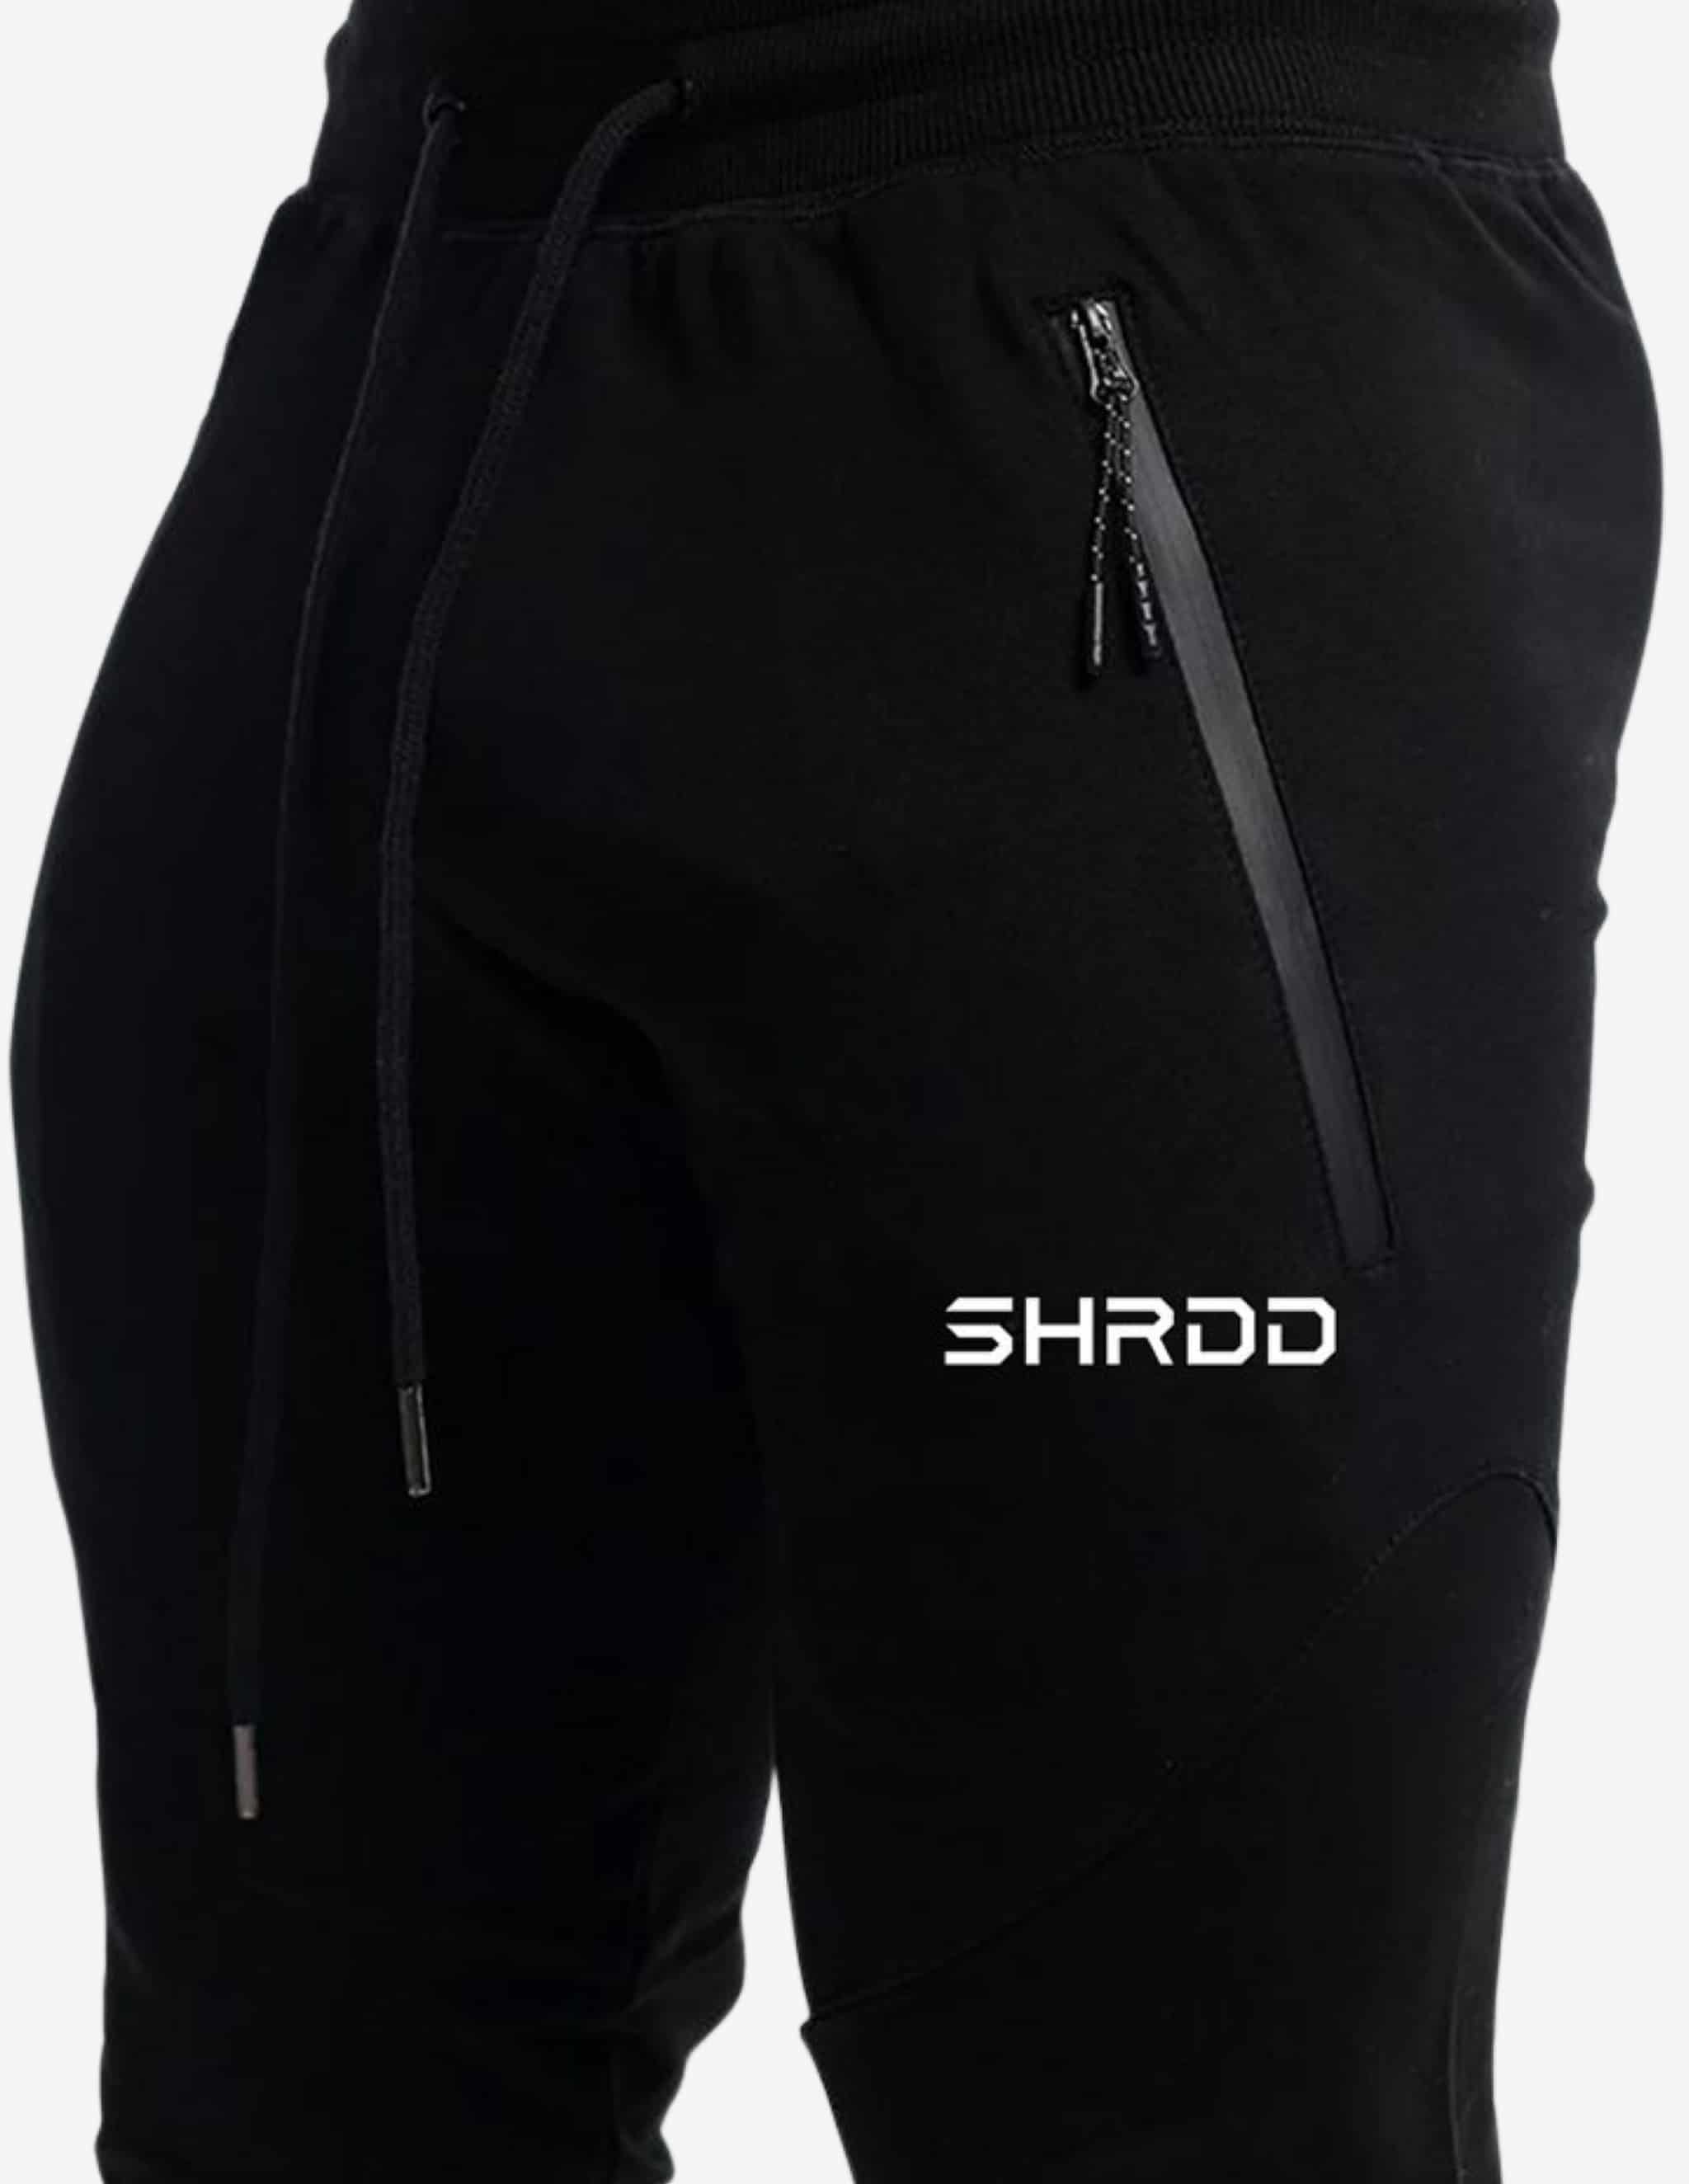 SHRDD Tapered joggers -Black/White-Bottom Man-Stay Shredded-Guru Muscle